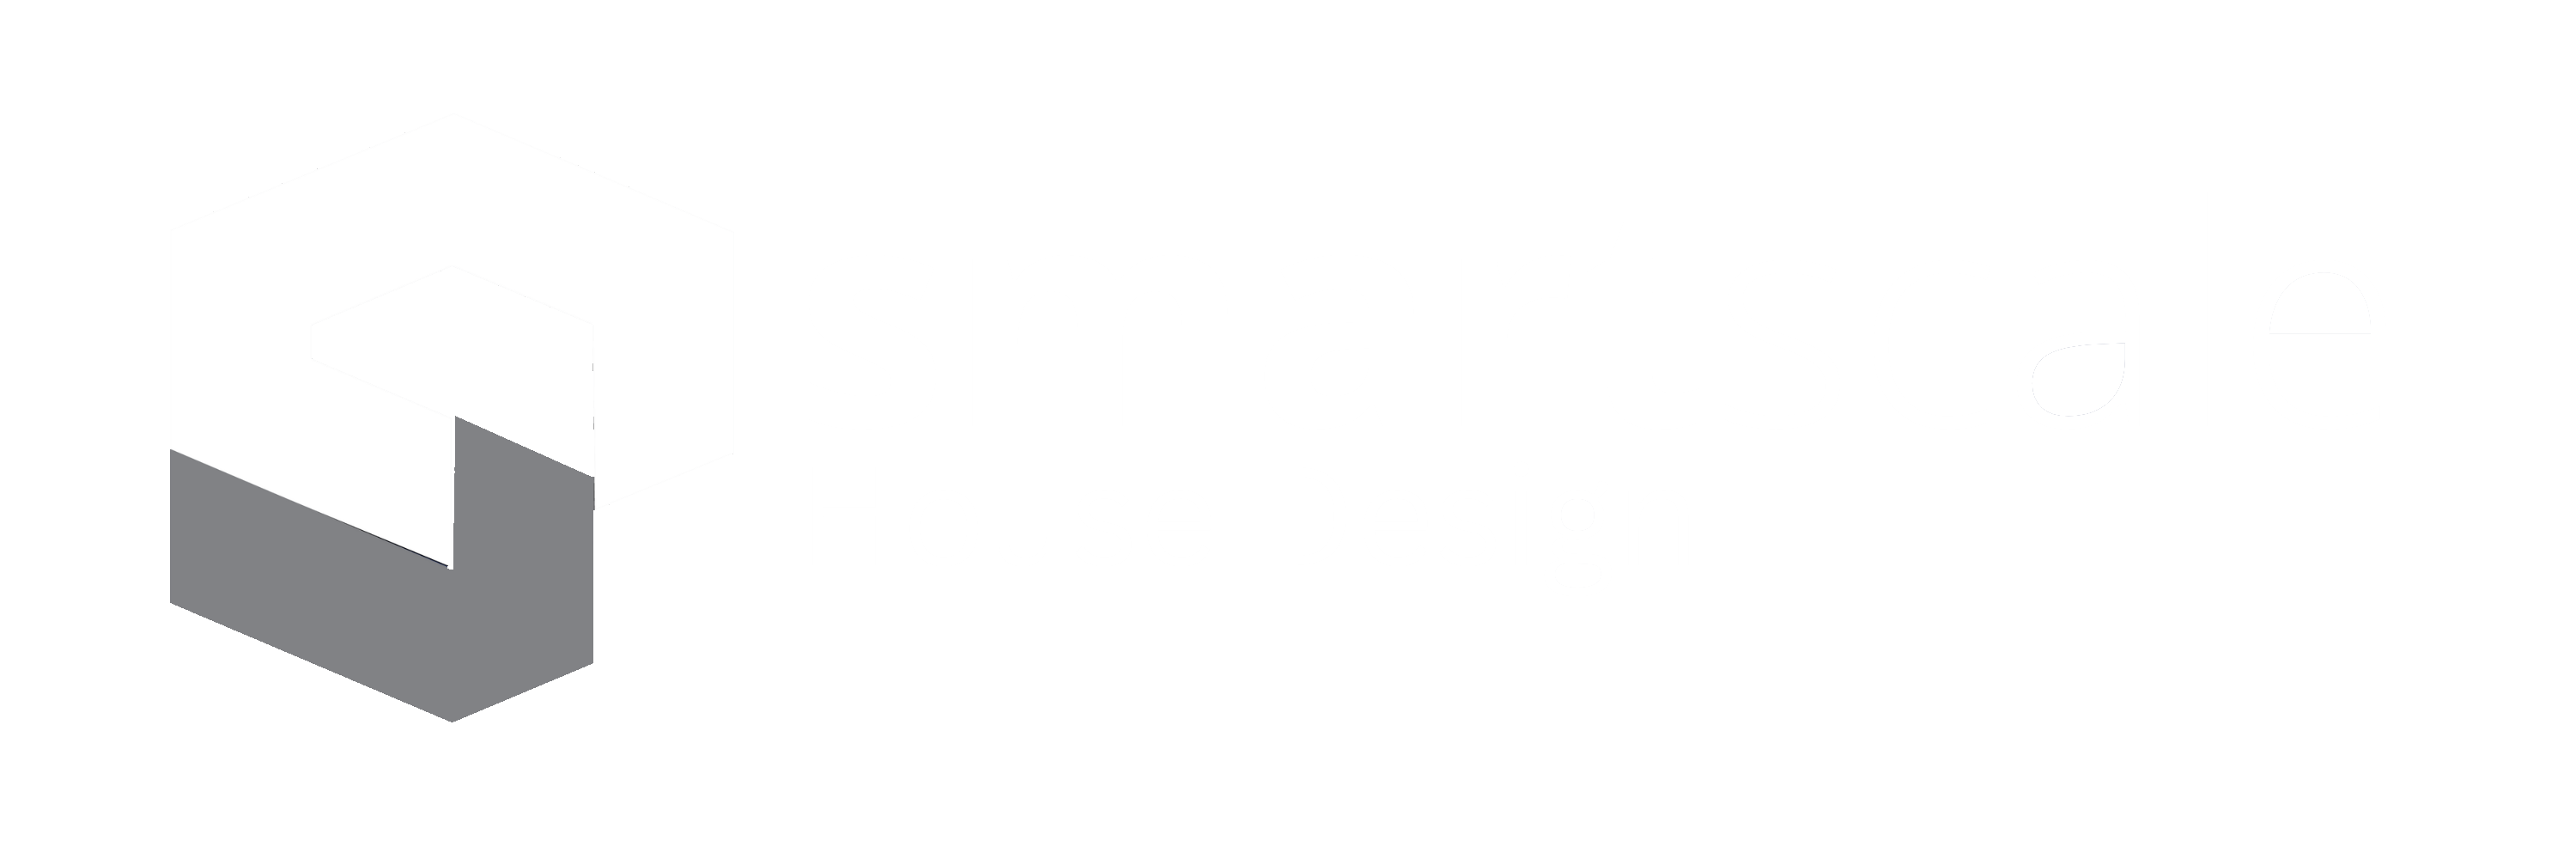 Smartscale-house-design-logo-white-1